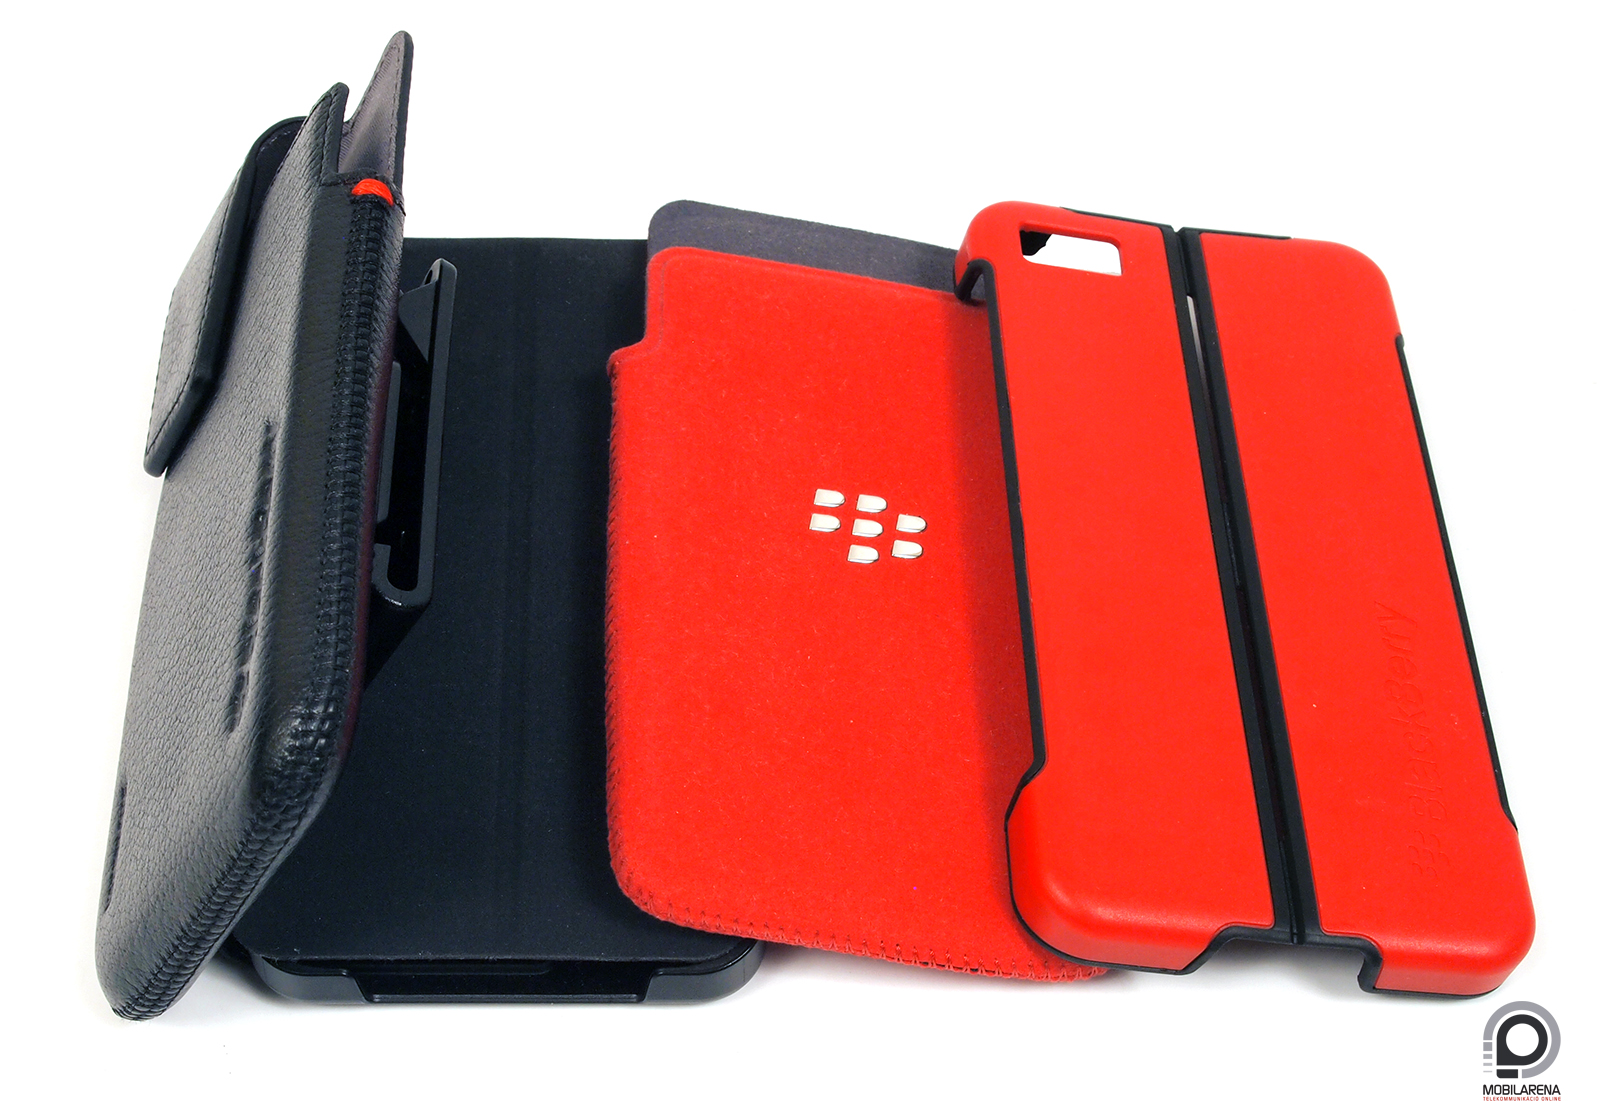 BlackBerry 10 tartozékok bemutatója - Mobilarena Tartozékok teszt